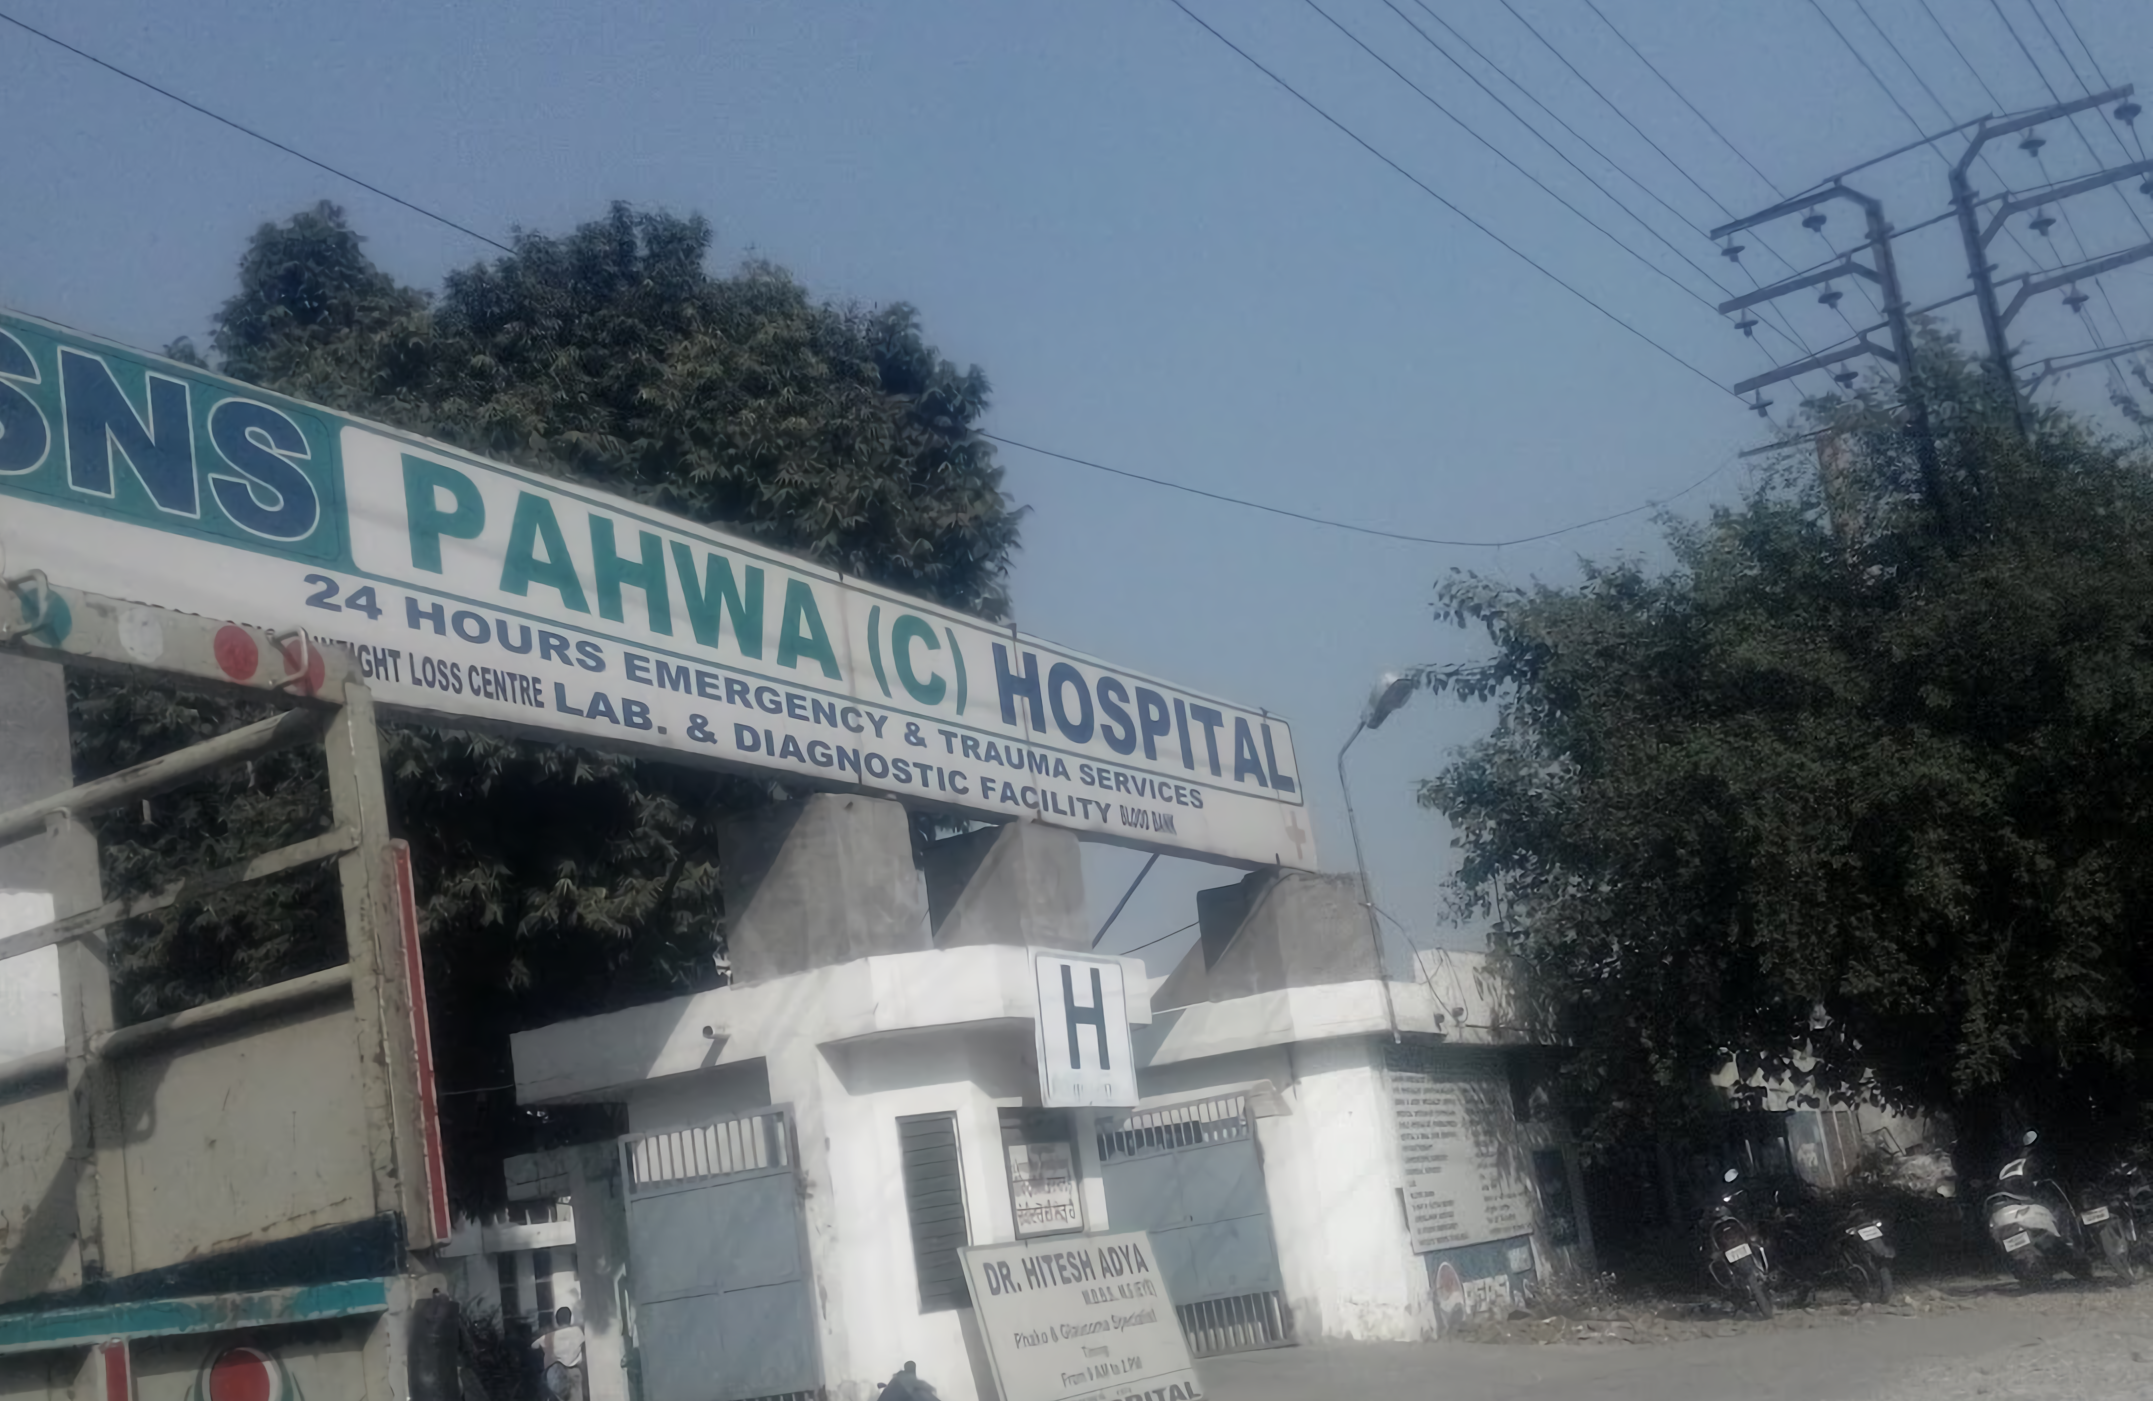 SNS Pahwa Charitable Hospital